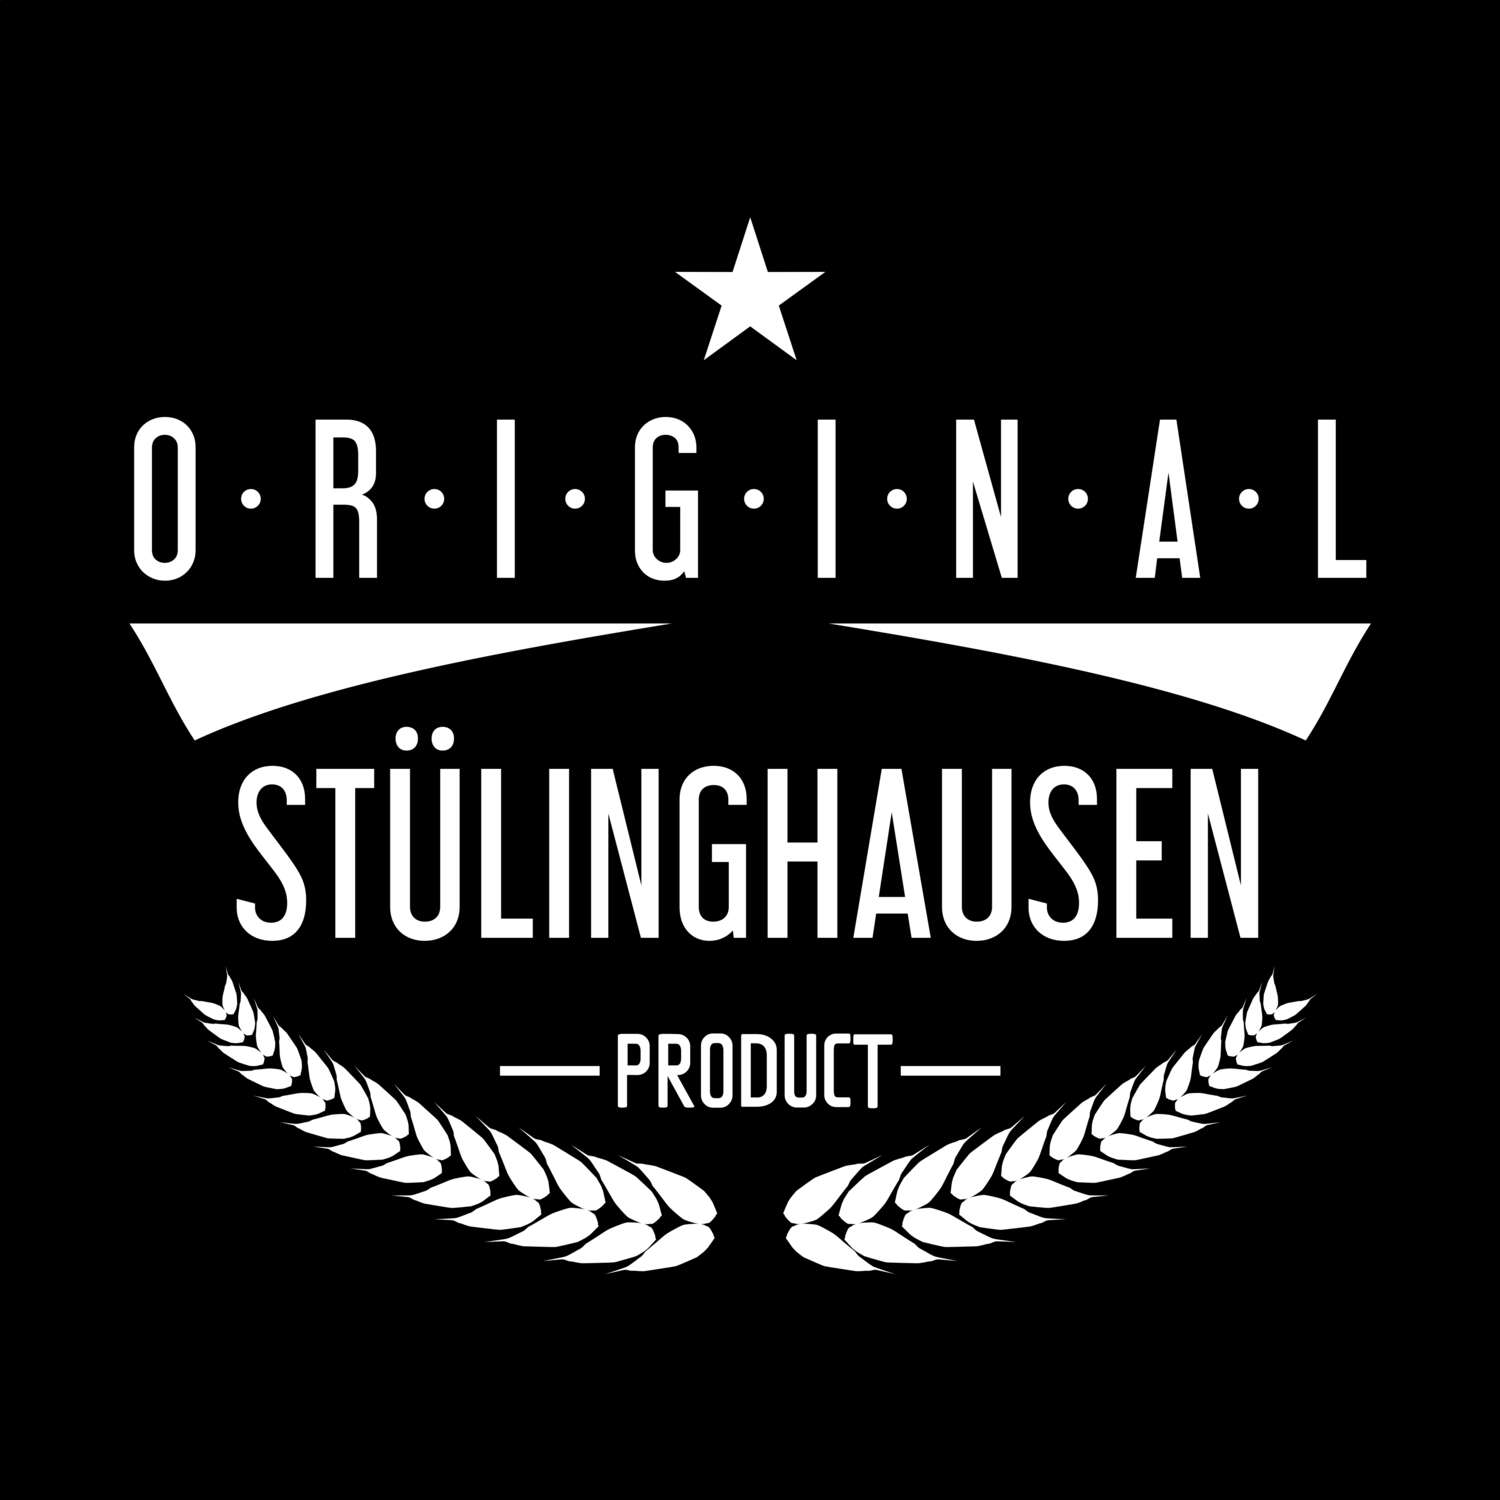 Stülinghausen T-Shirt »Original Product«